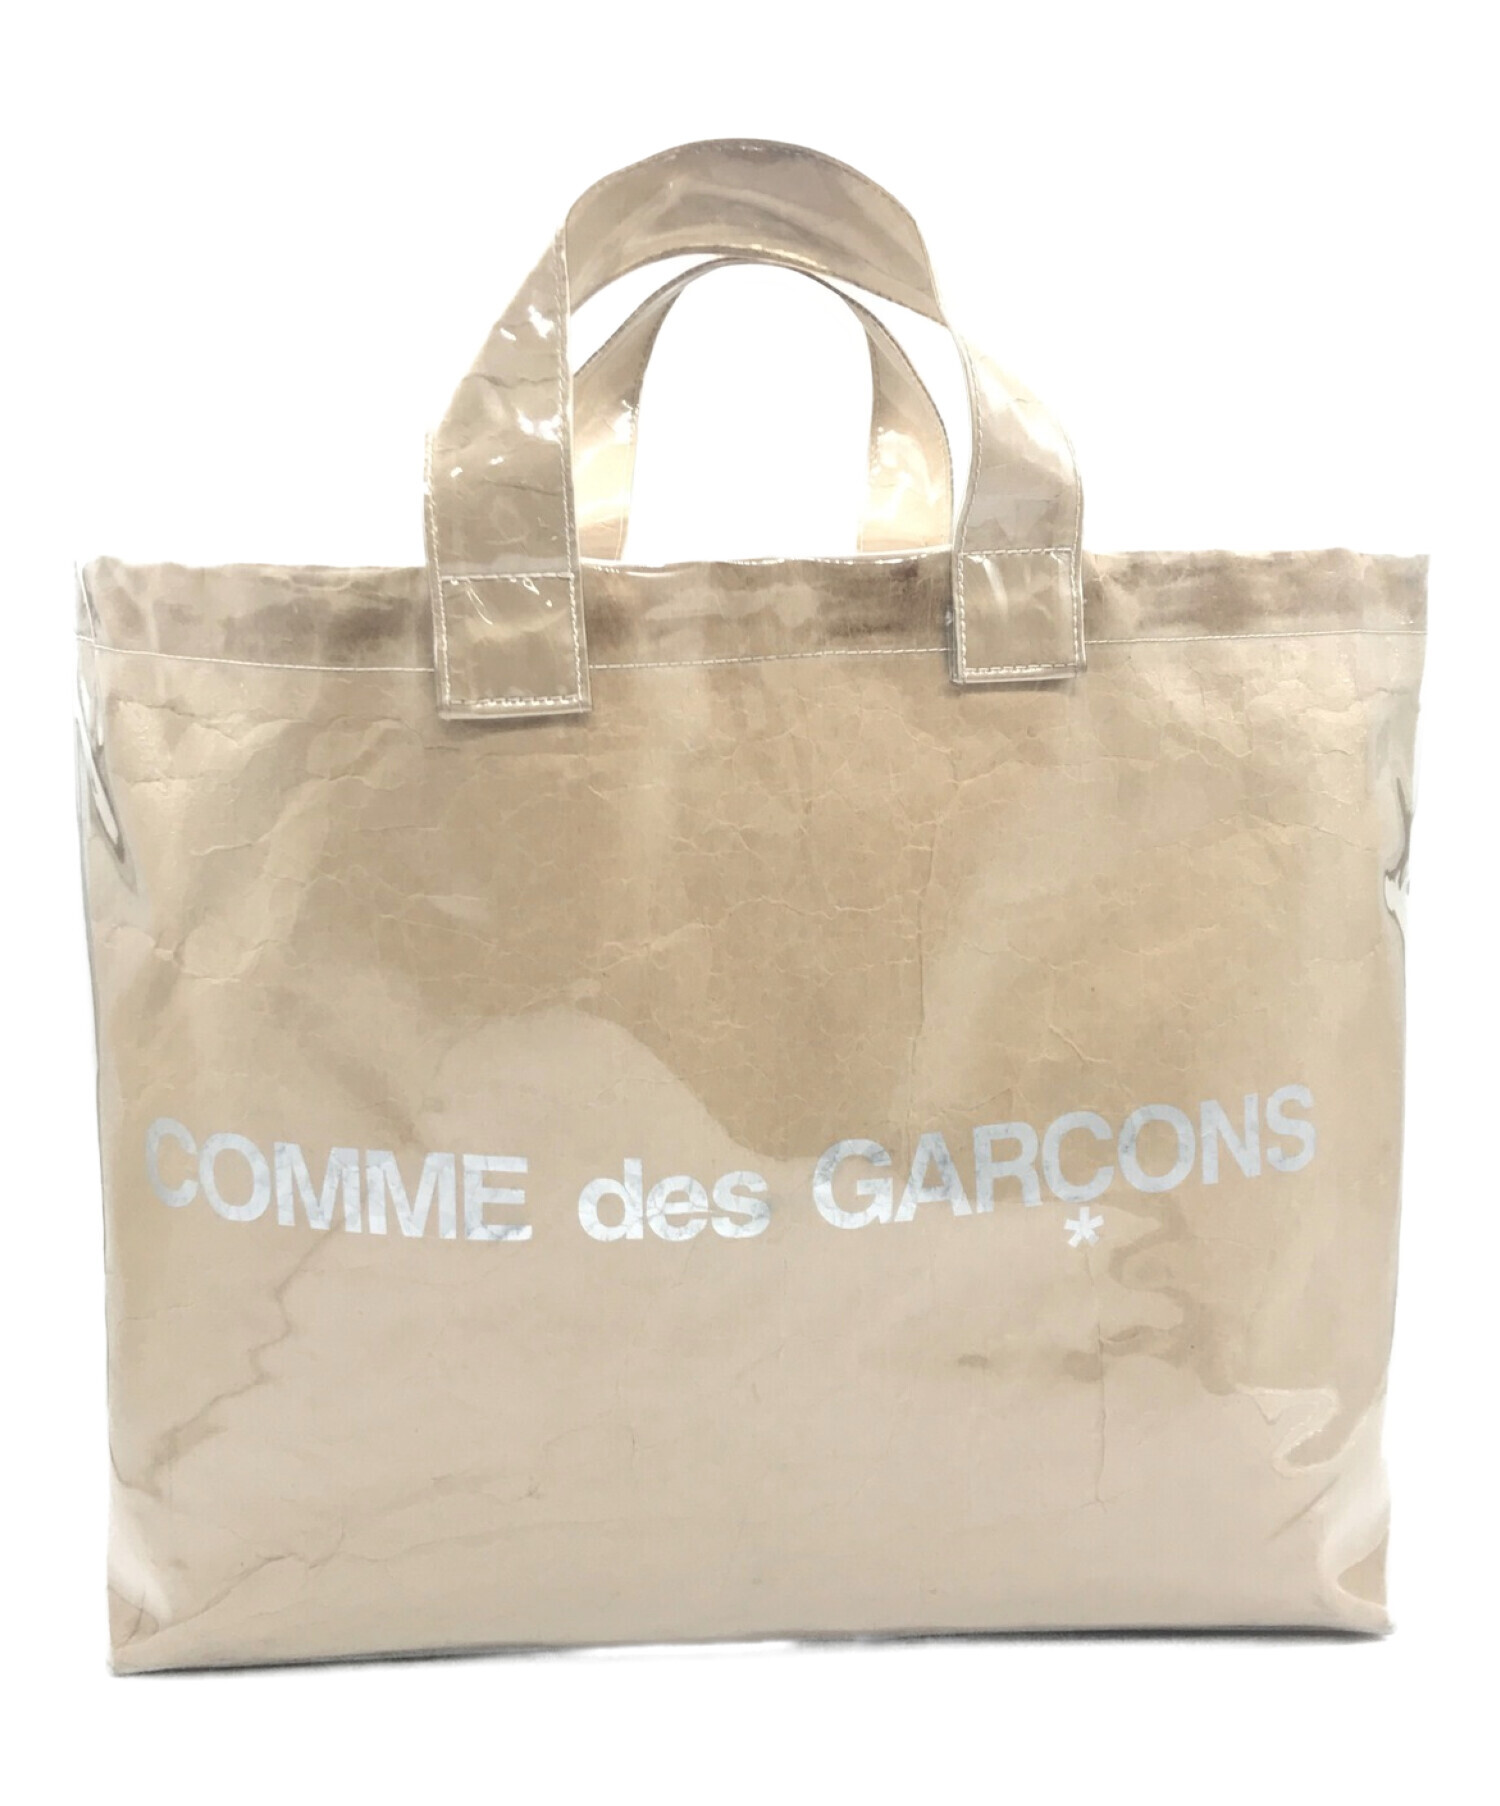 COMME des GARCONS (コムデギャルソン) PVCトートバッグ ベージュ サイズ:下記参照